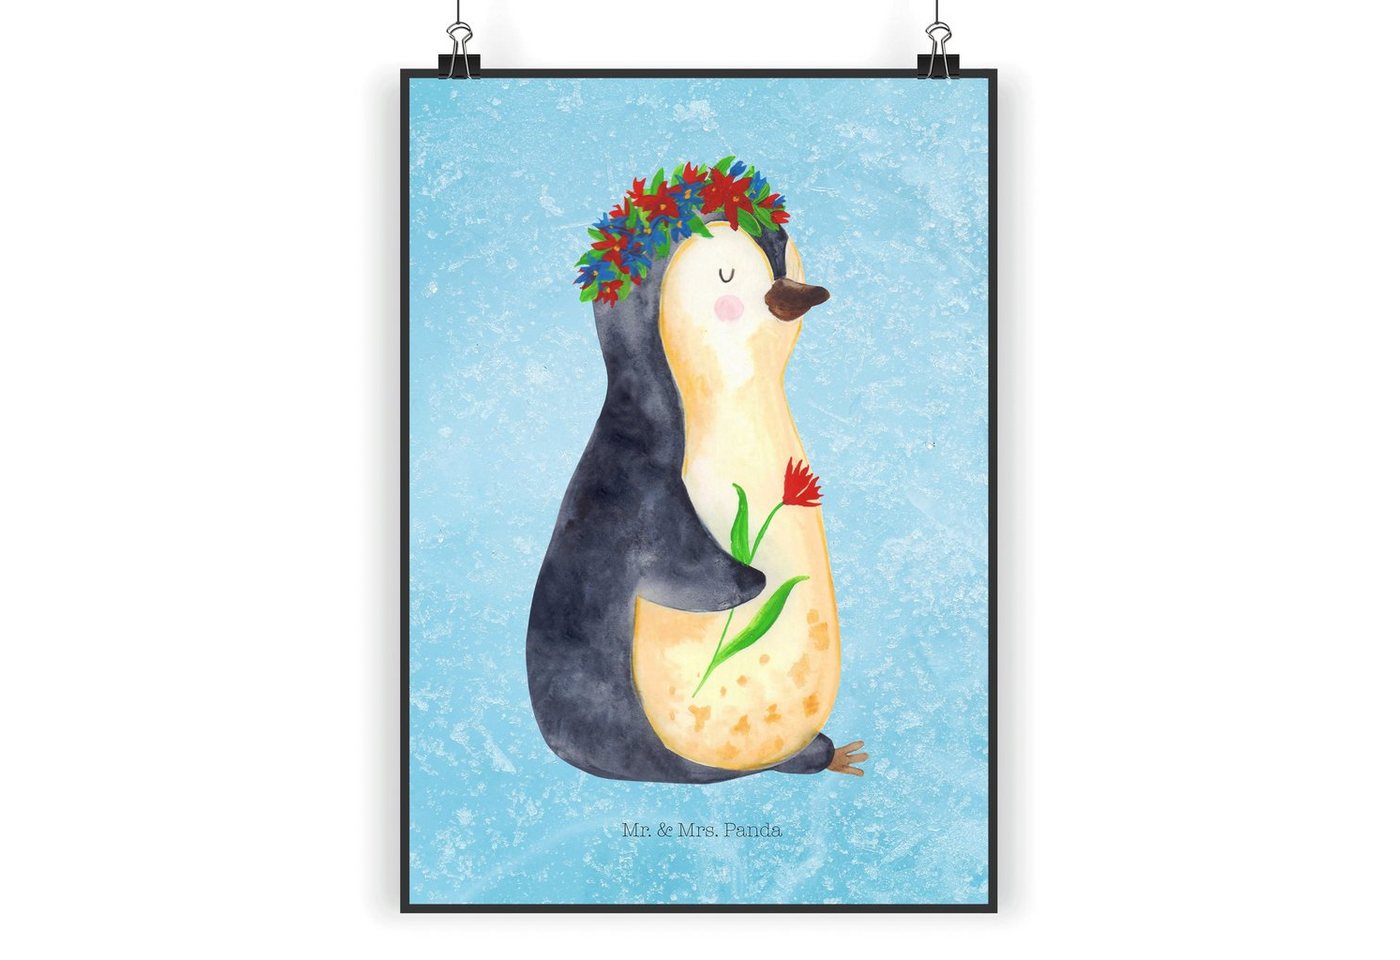 Mr. & Mrs. Panda Poster DIN A3 Pinguin Blumen - Eisblau - Geschenk, Wandposter, Designposter, Pinguin Blumenkranz (1 St), Lebensfrohes Design von Mr. & Mrs. Panda